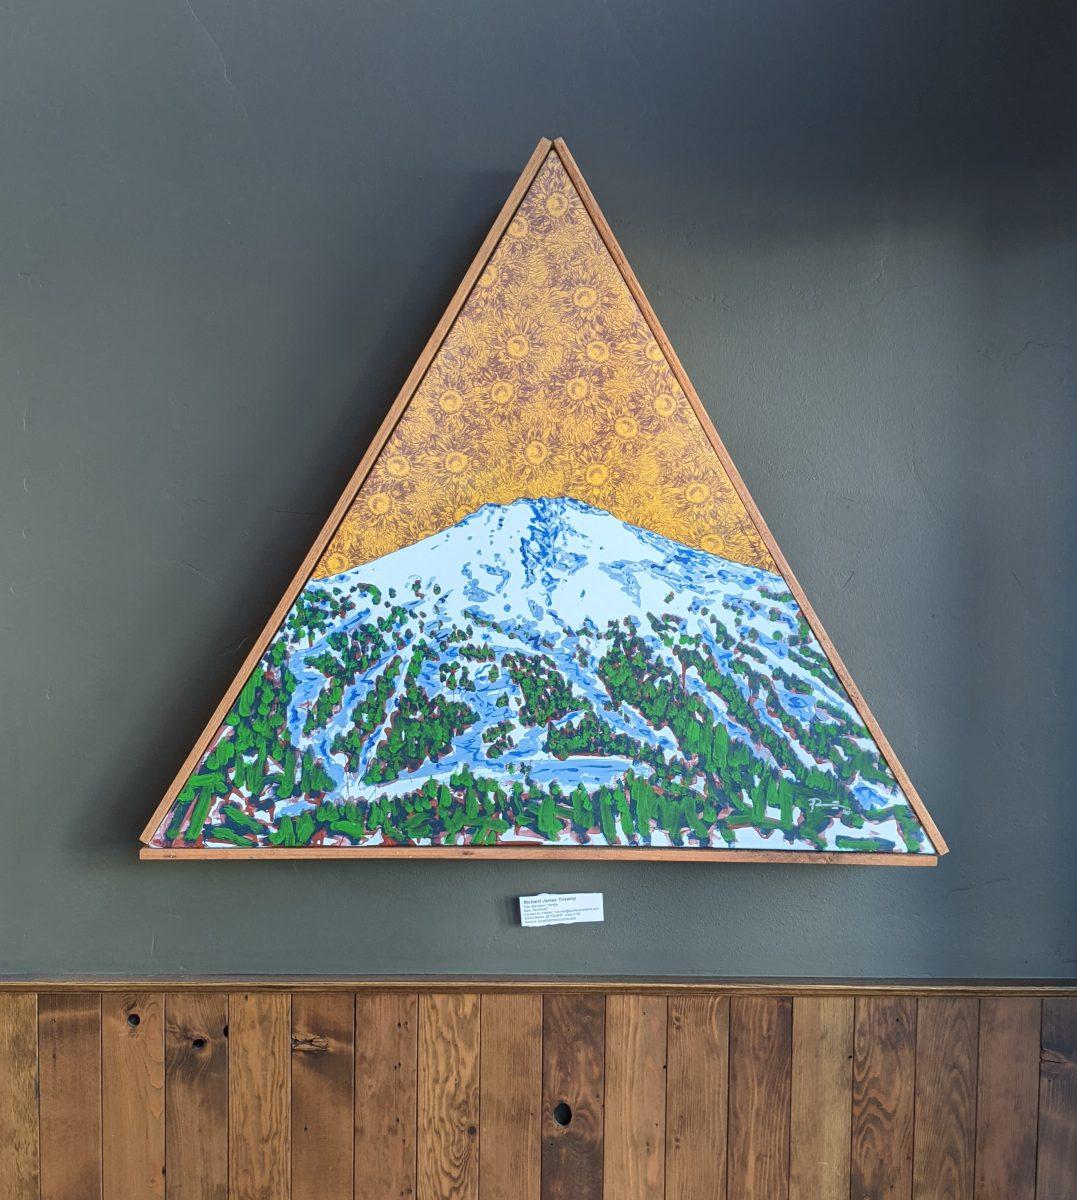 Richard Yozamp art piece on triangular canvas
Credit: Ayla Adkins